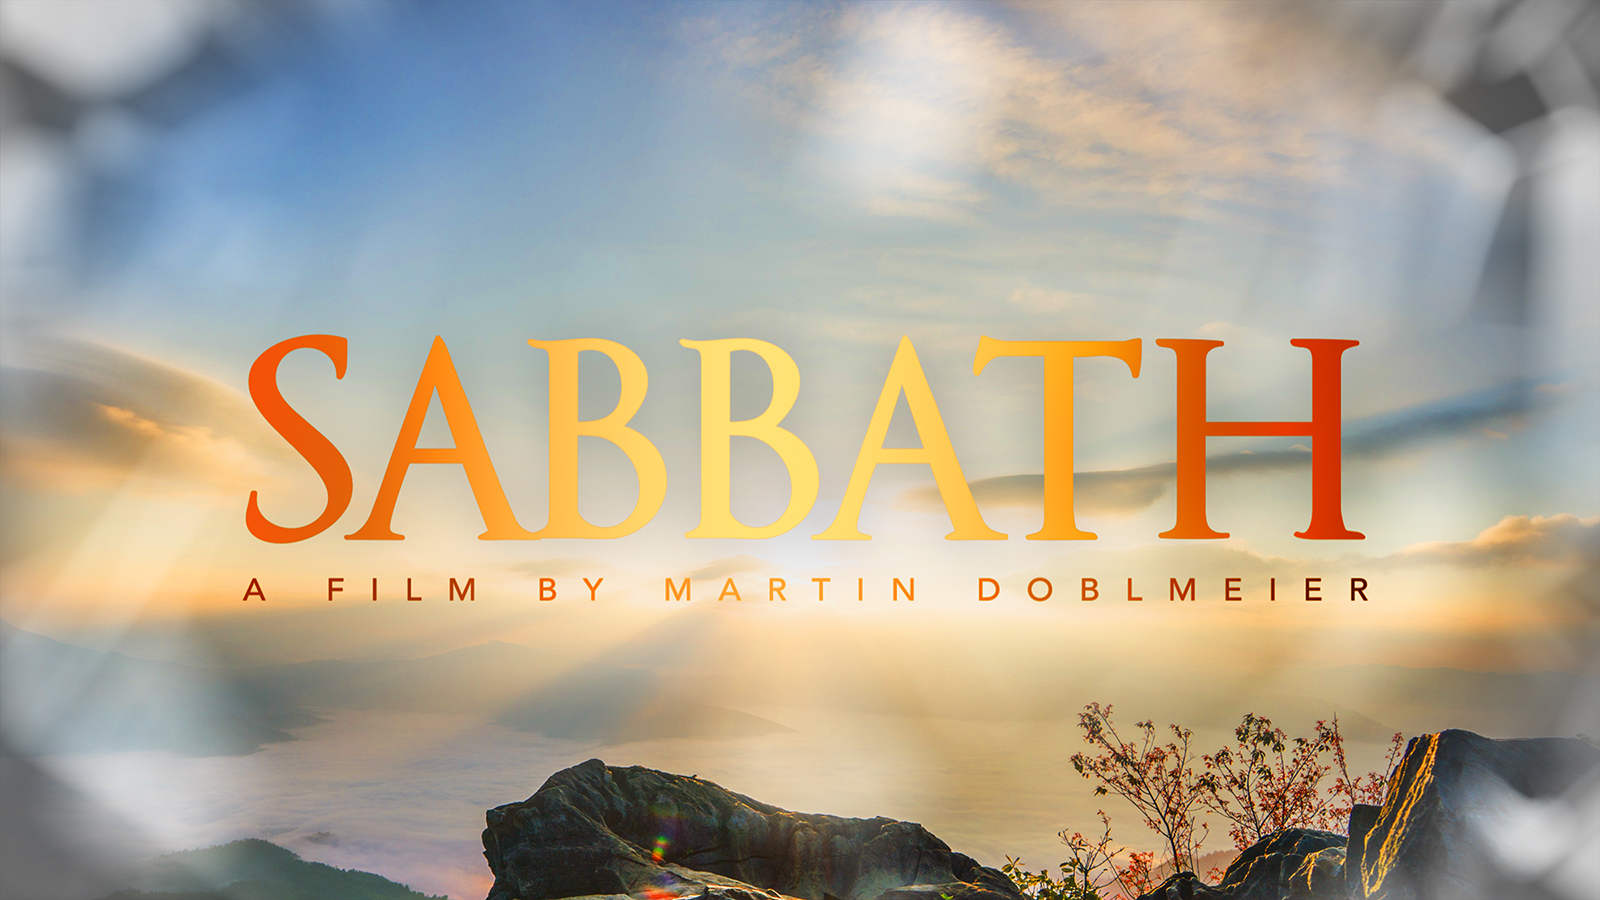 “Sabbath" poster. Image courtesy Journey Films